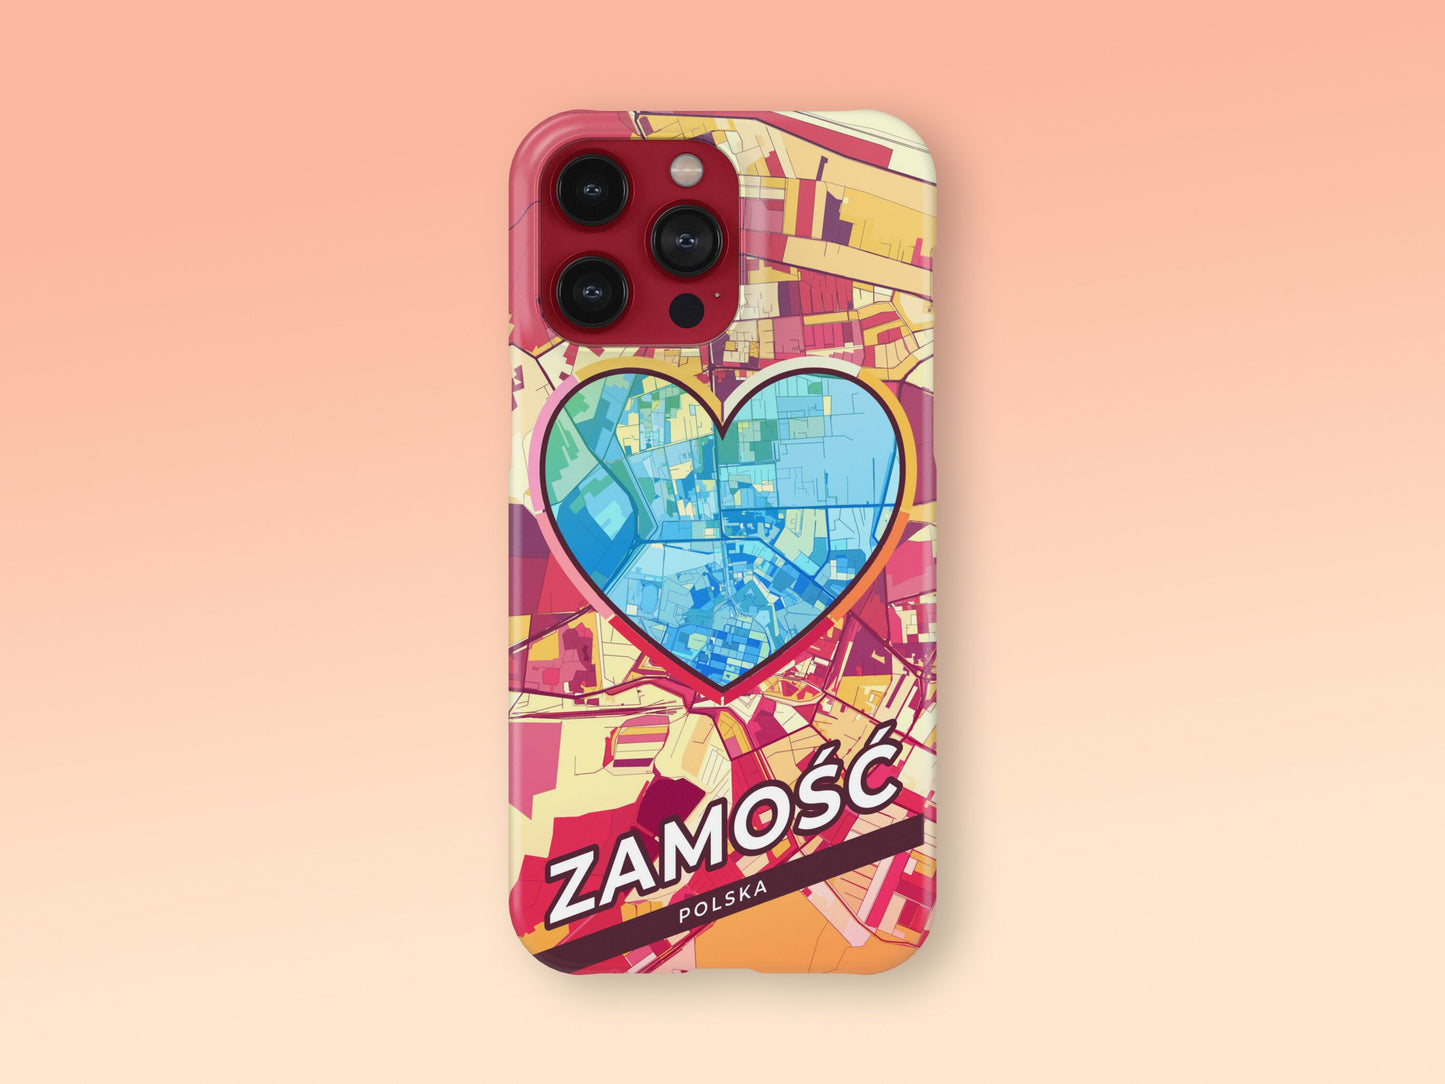 Zamość Poland slim phone case with colorful icon 2